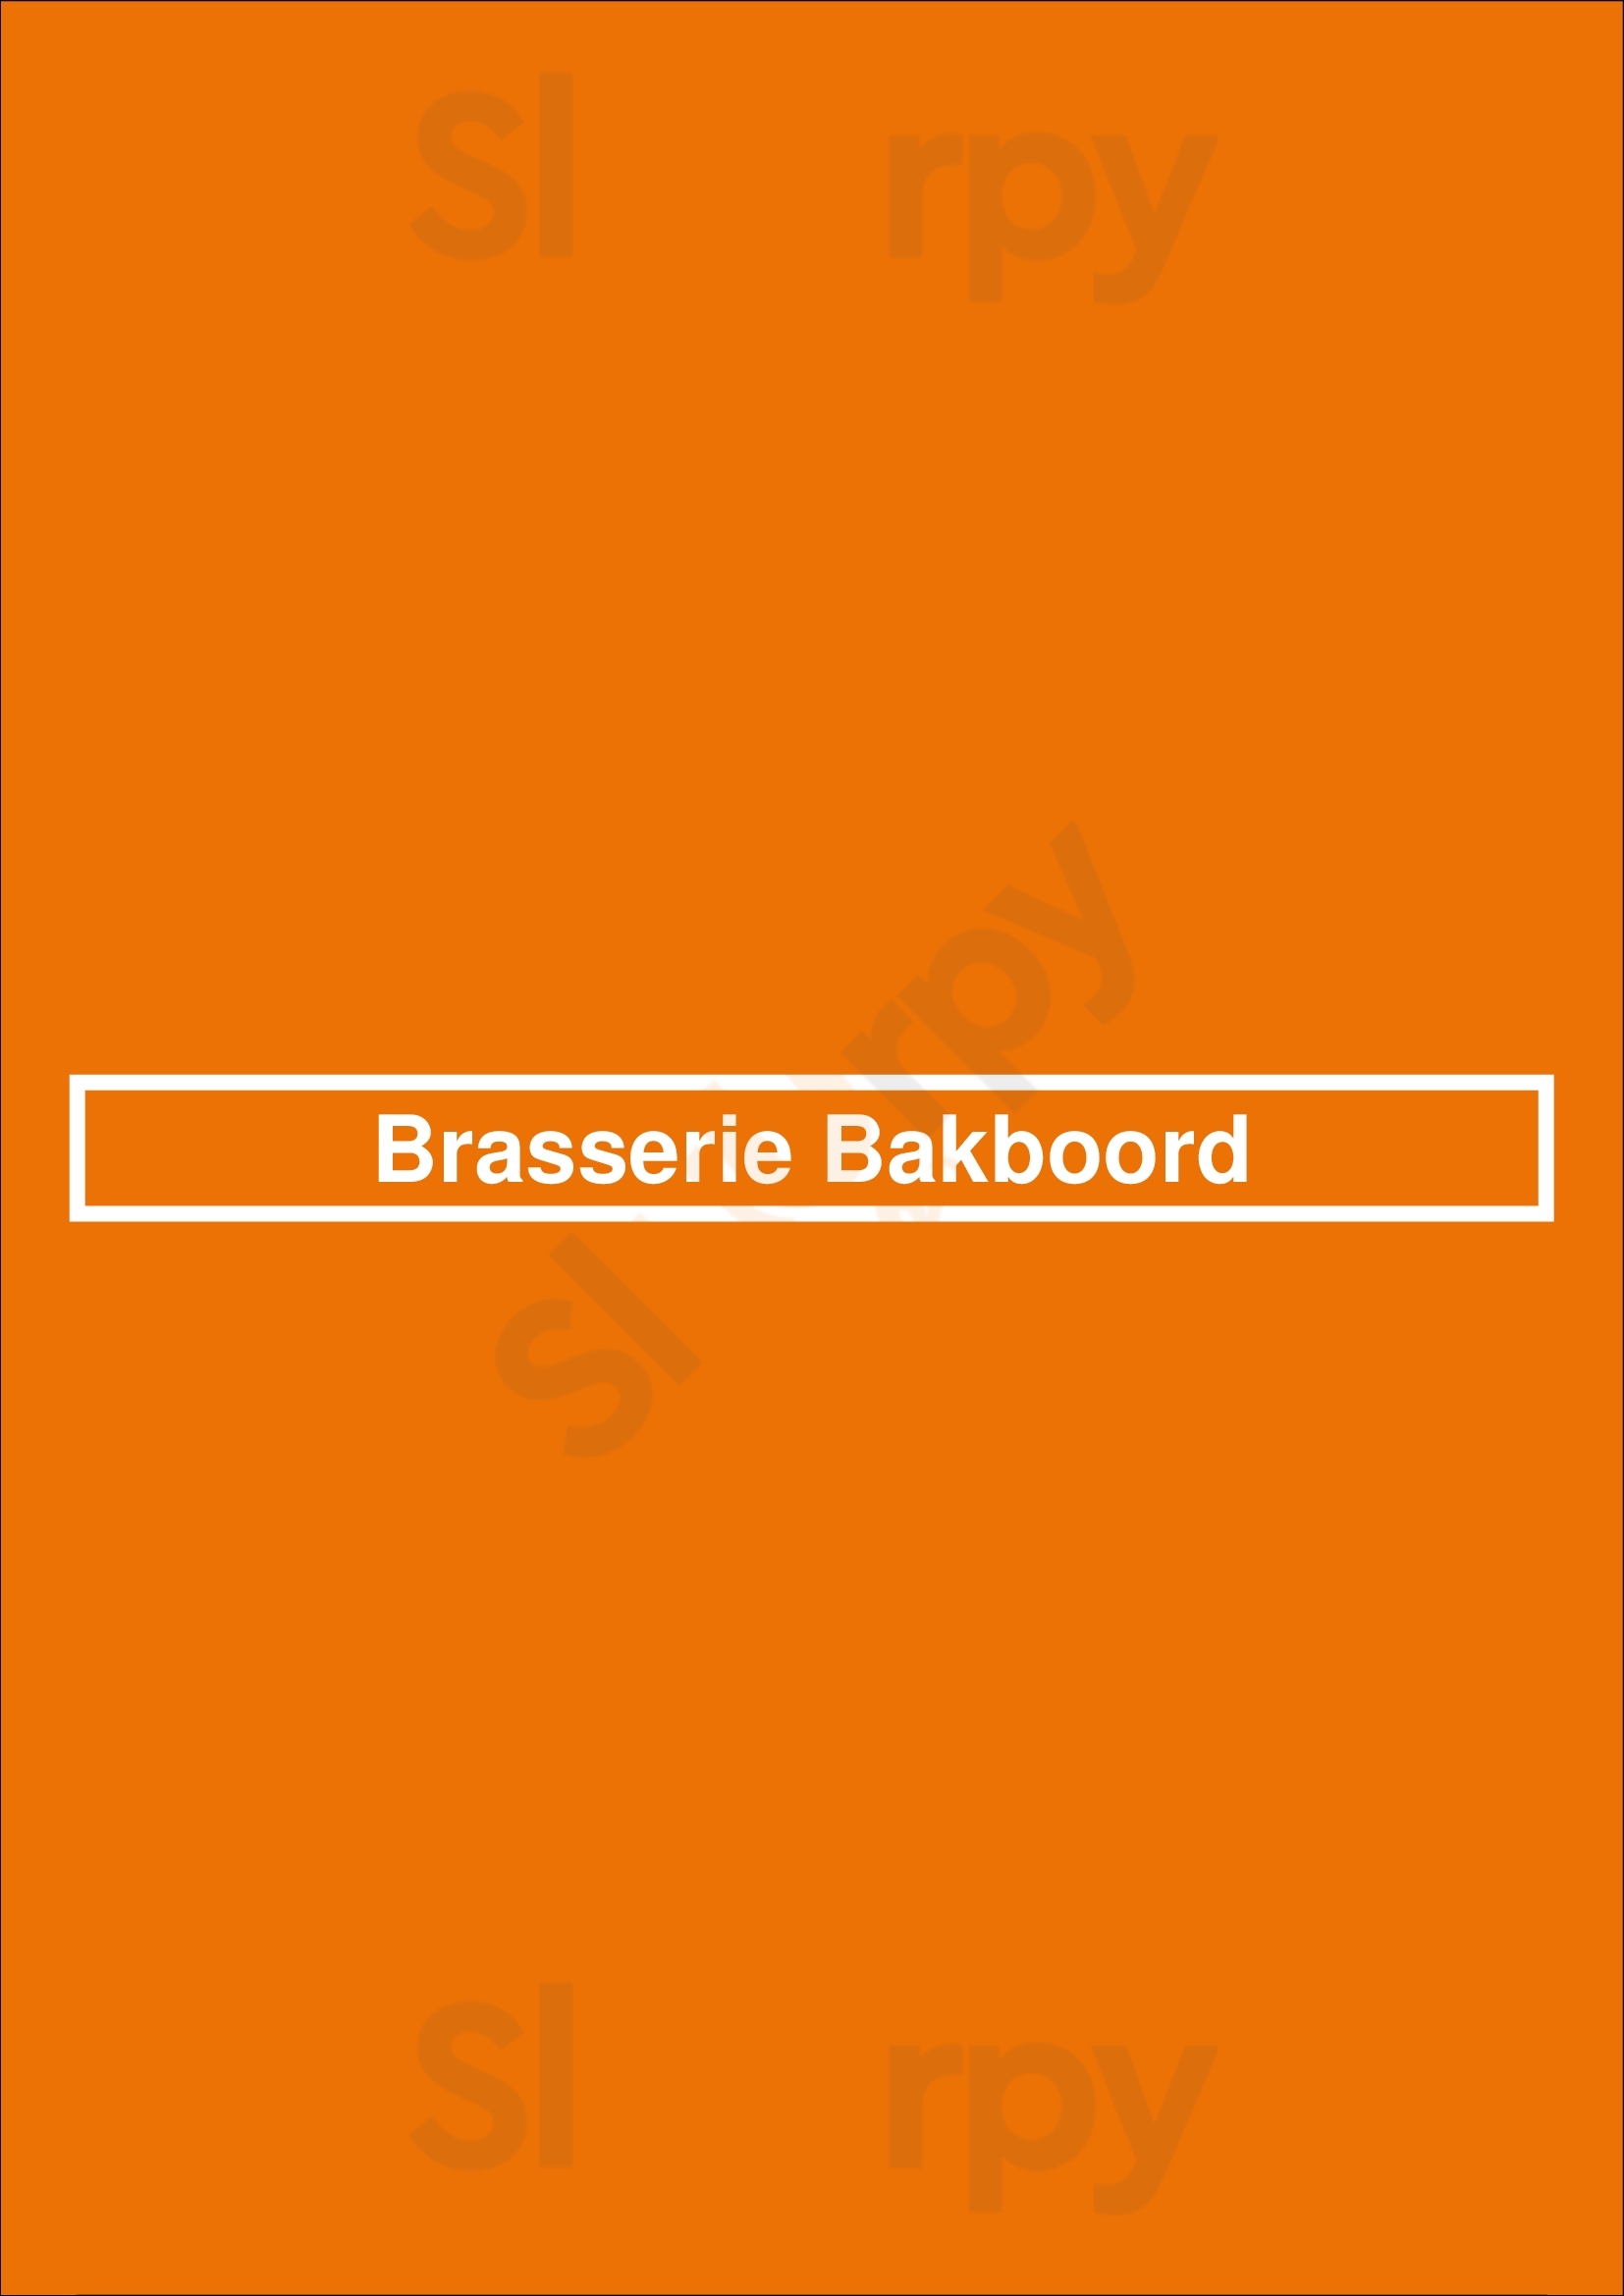 Brasserie Bakboord Almere Menu - 1